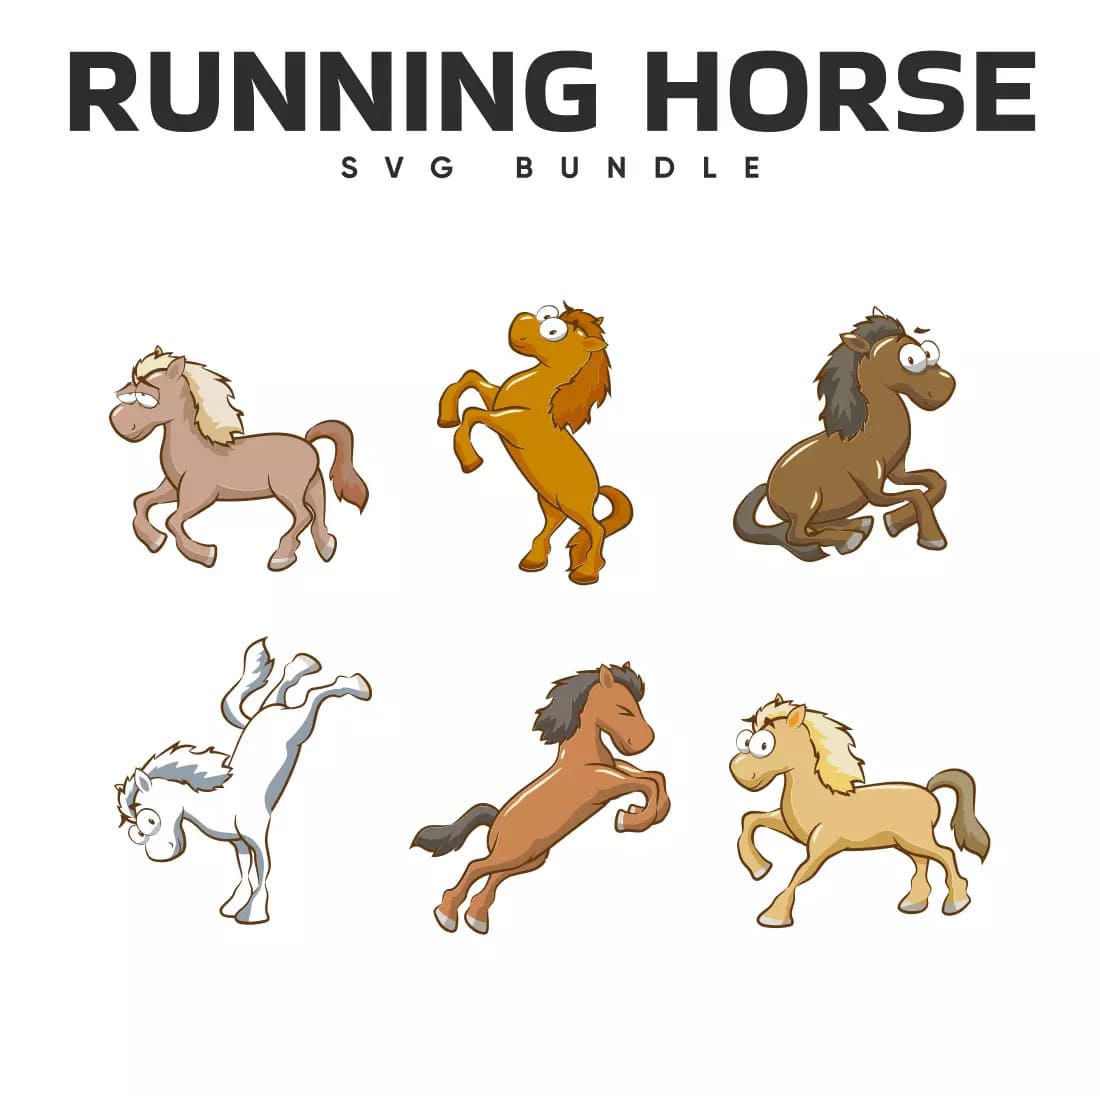 The running horse svg bundle.